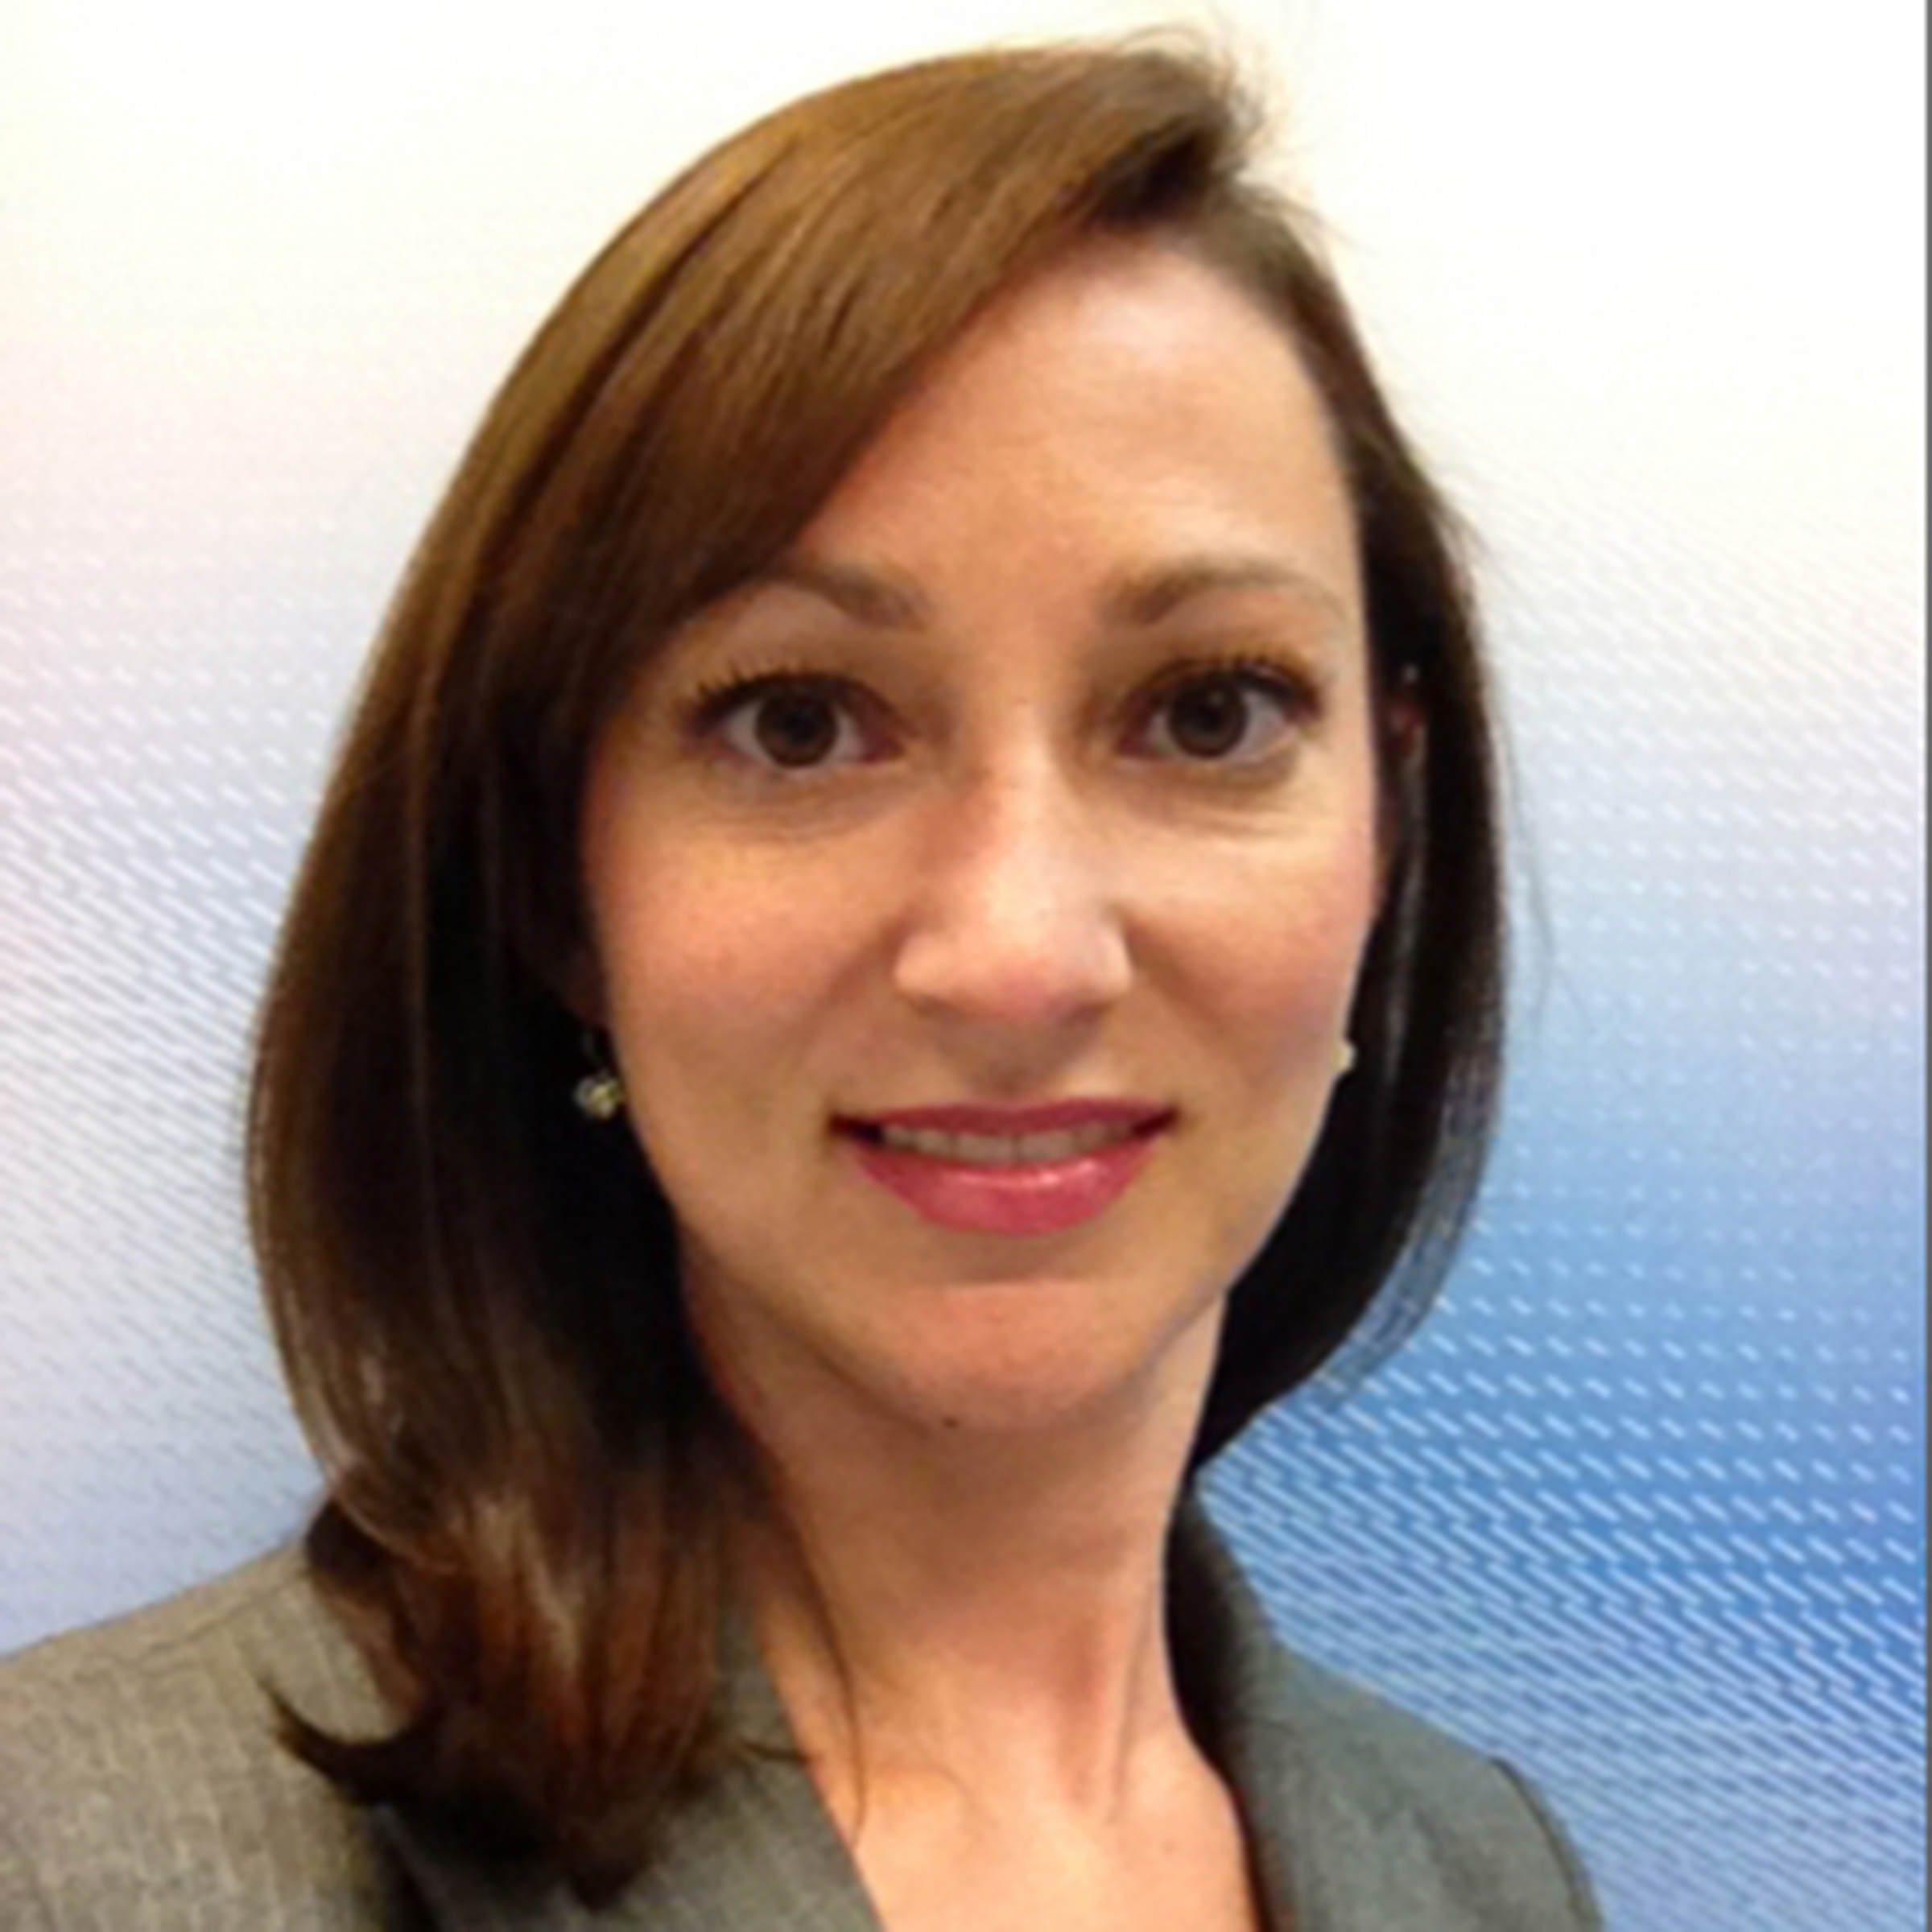 Profile image of Kelly L. Alvarez